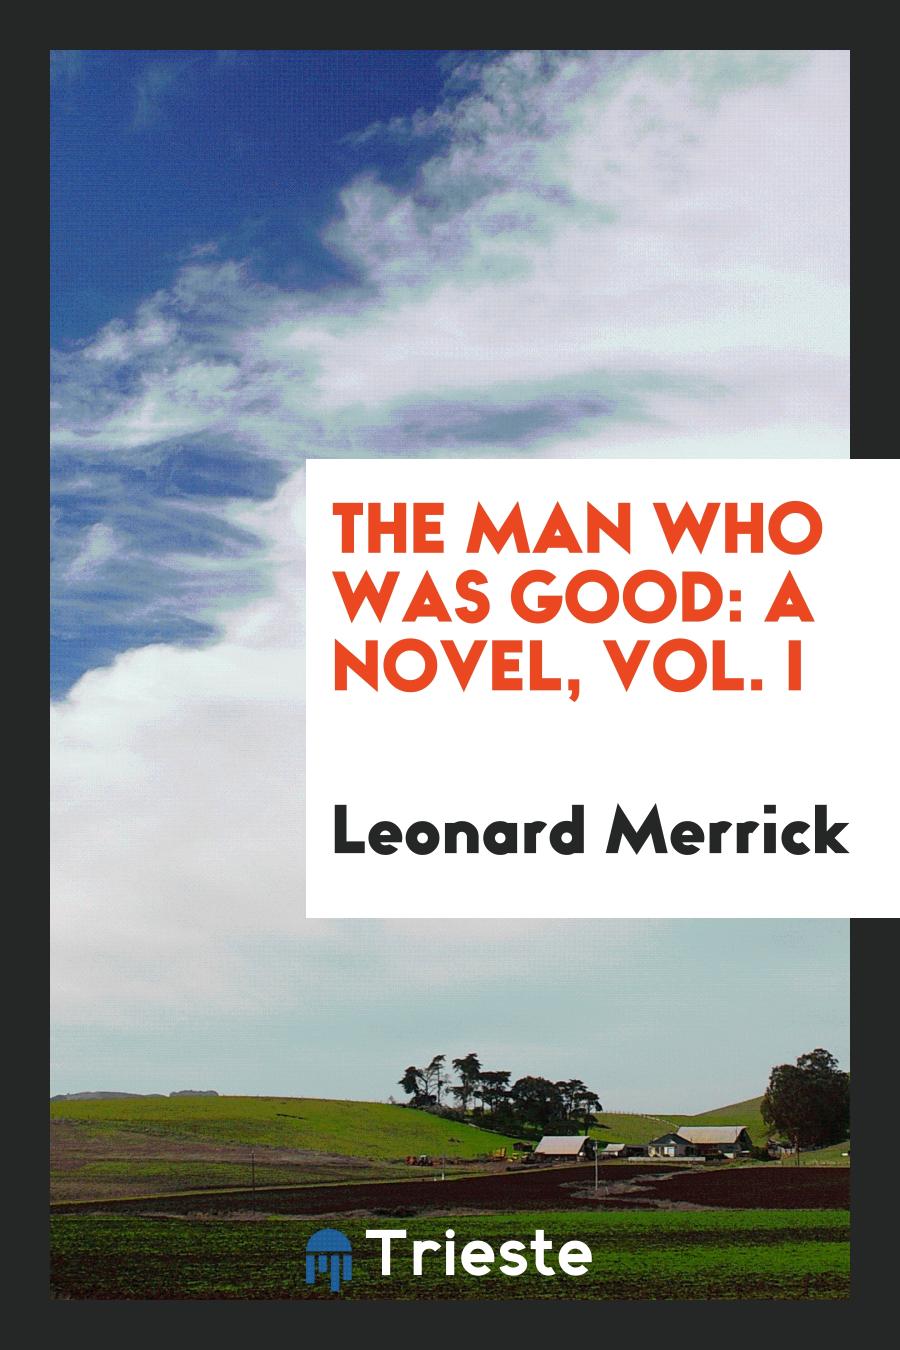 The Man Who Was Good: A Novel, Vol. I